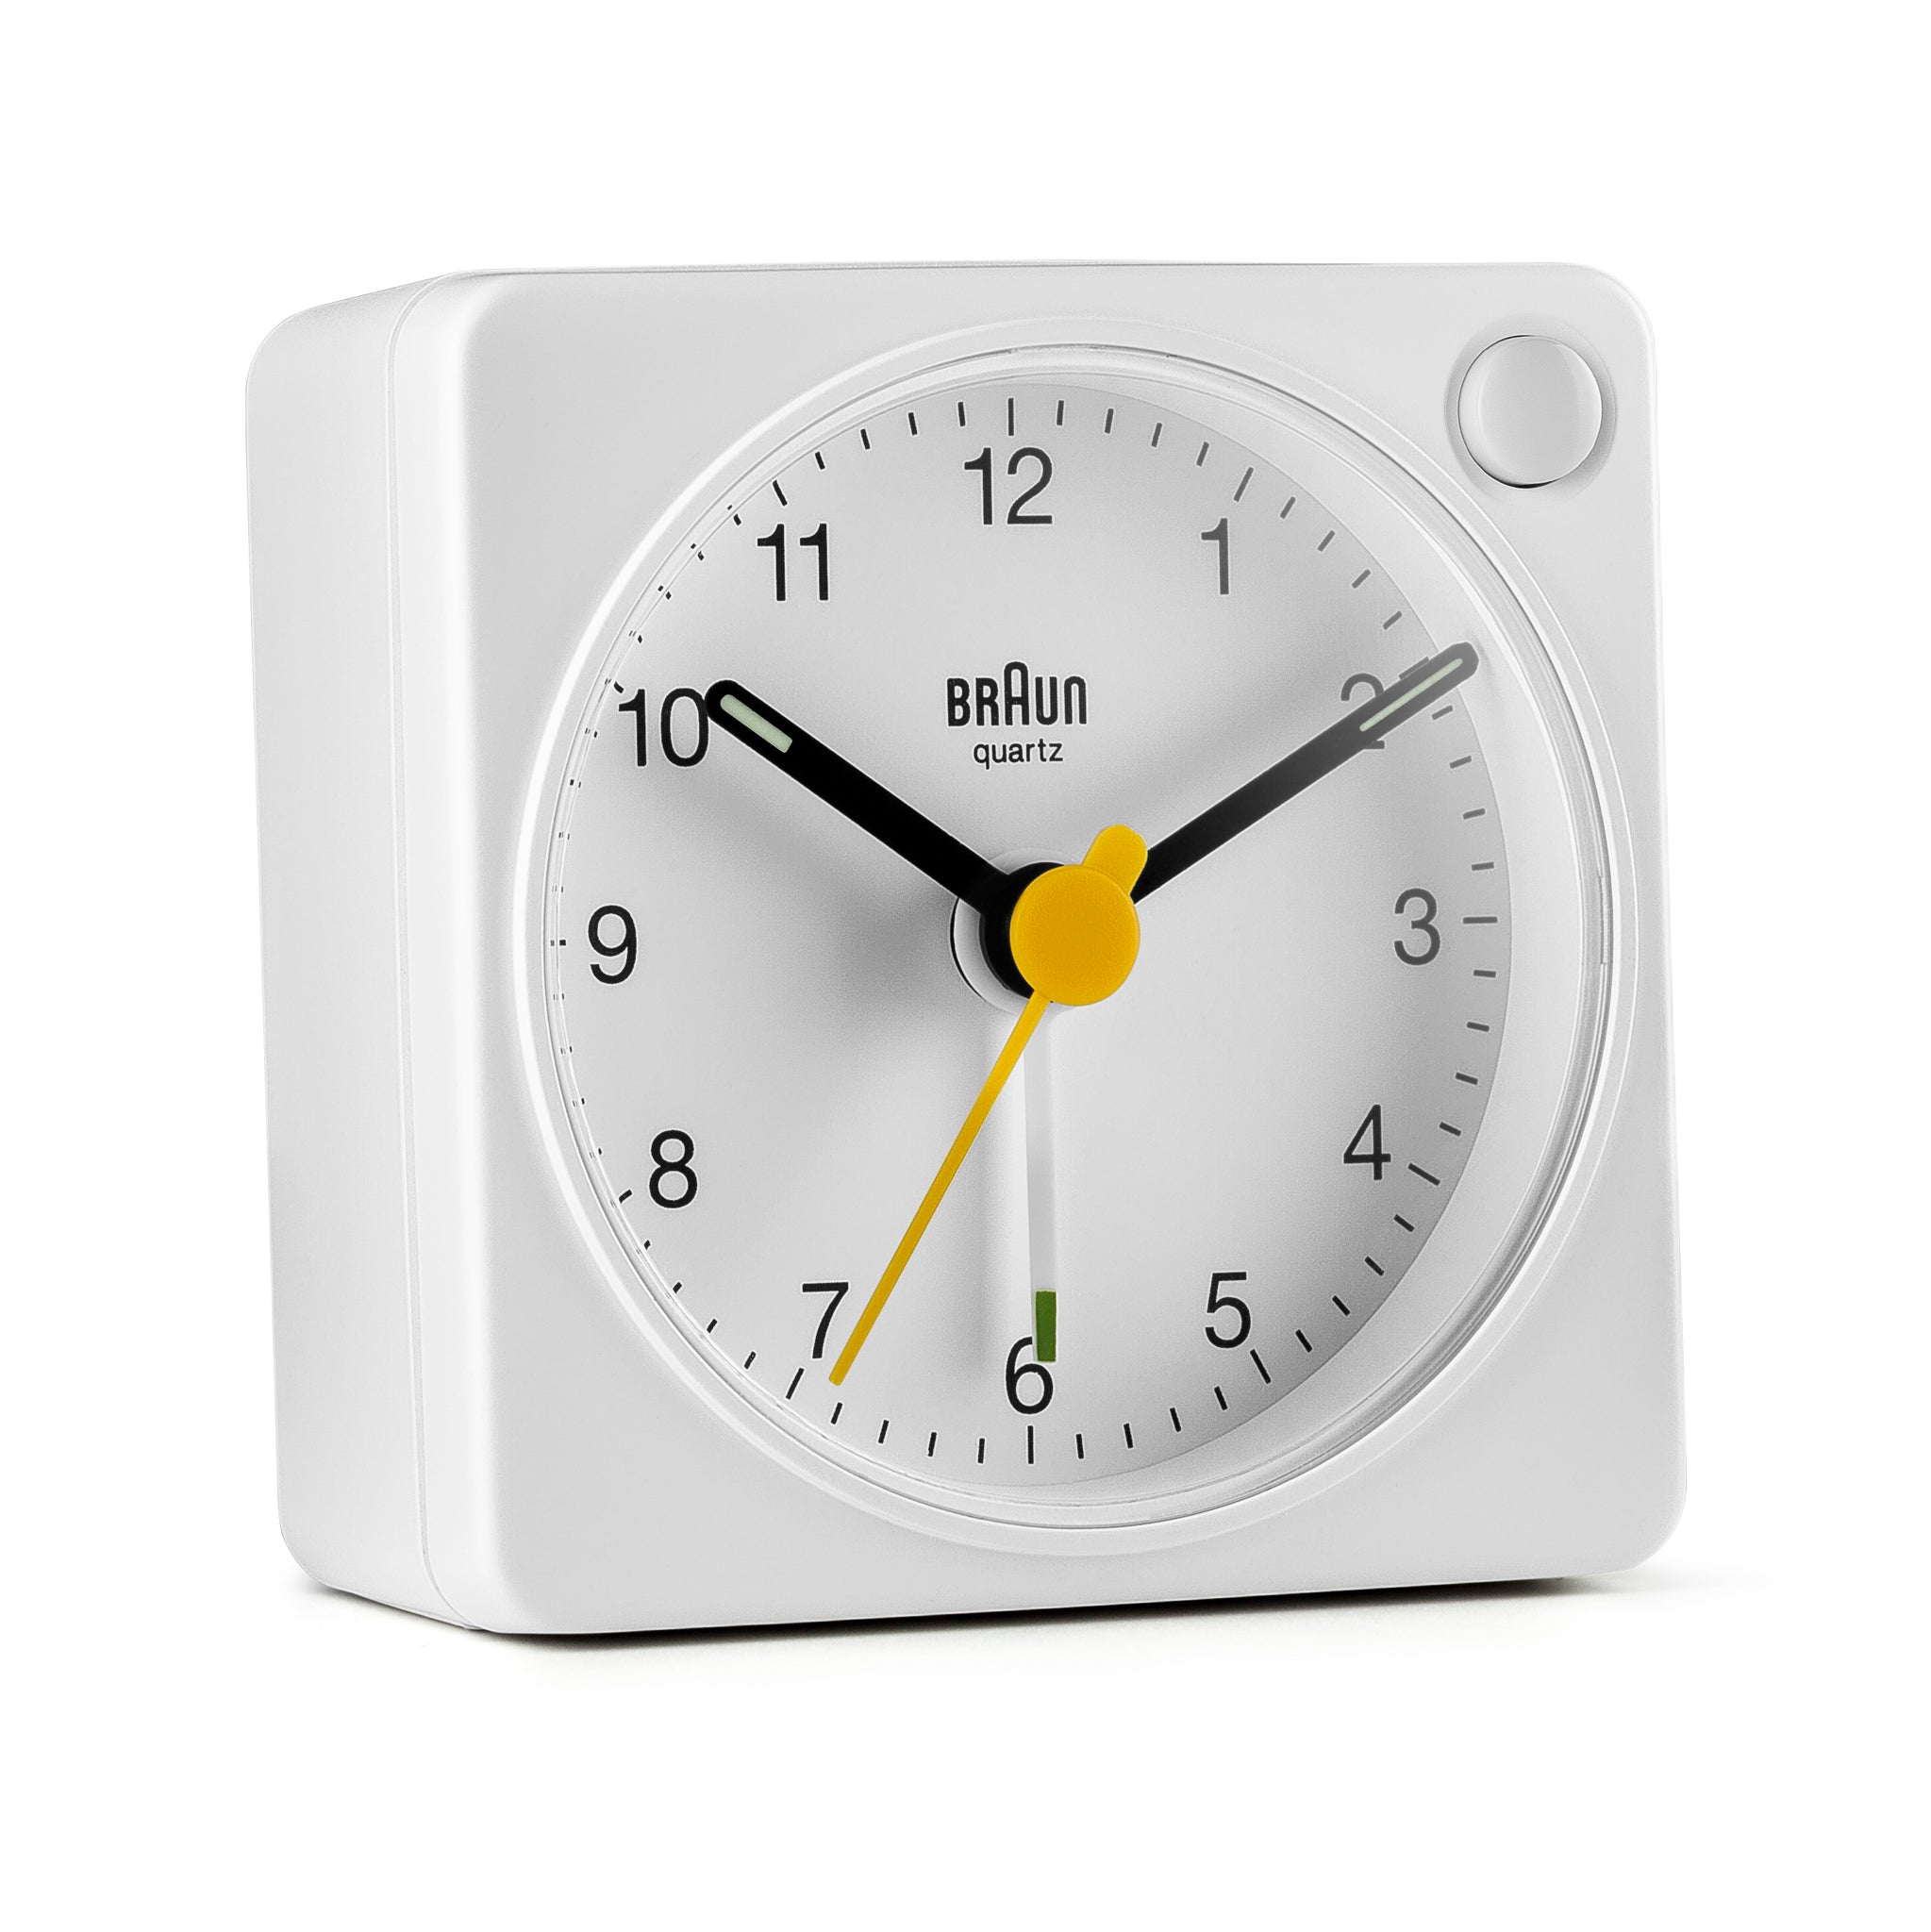 BC02XW Classic Analogue Travel Alarm Clock